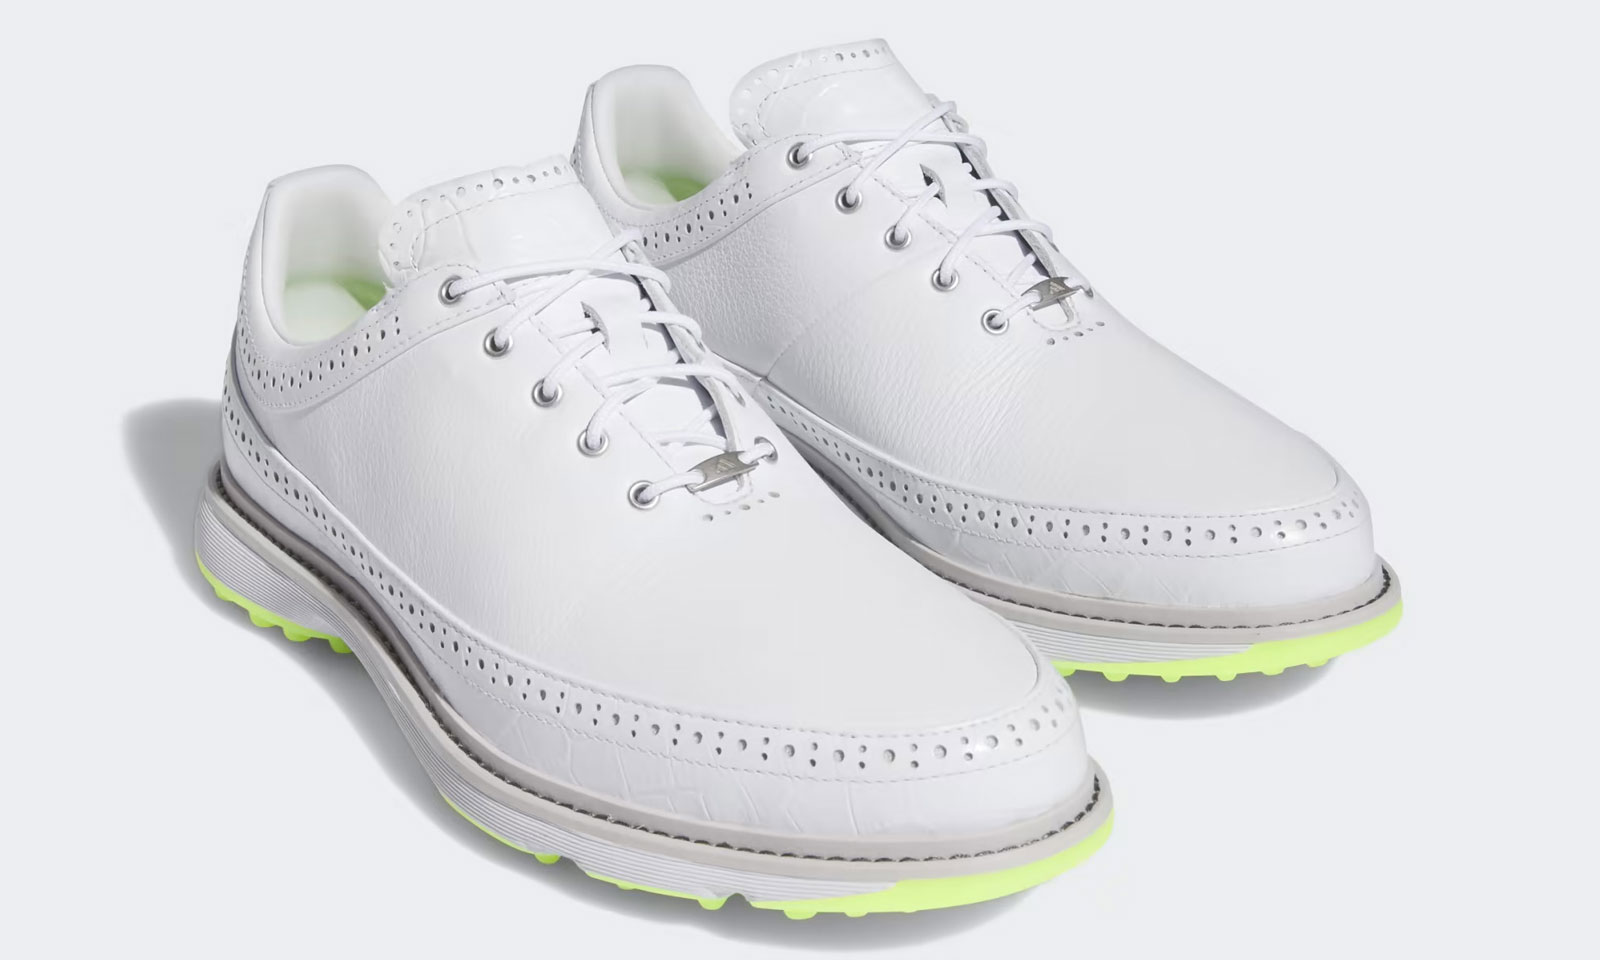 Adidas MC80 Golf Shoe Drop Alert